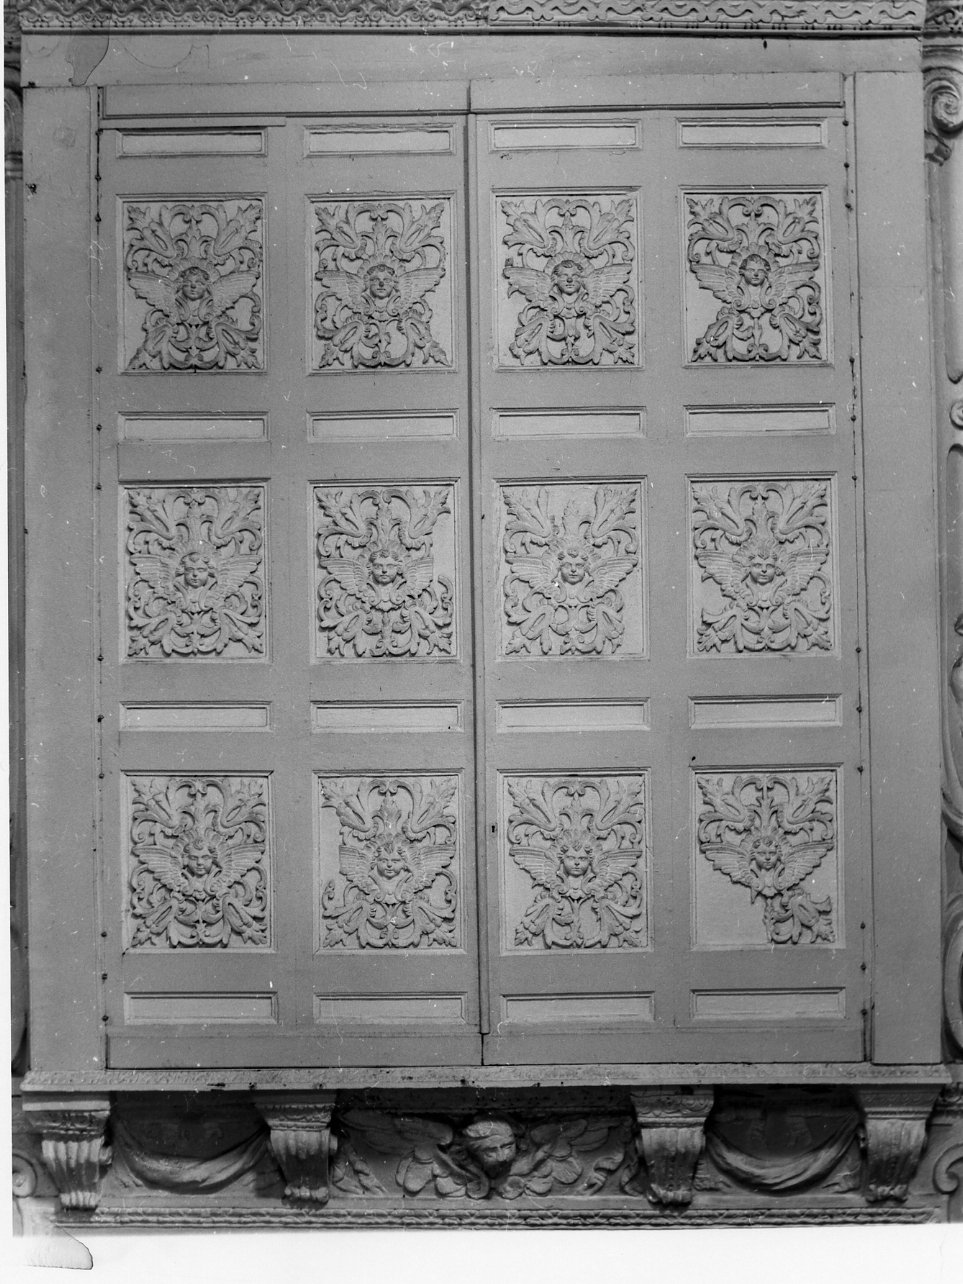 cherubini e motivi decorativi fitomorfi (stipo - a muro, serie) - bottega napoletana (seconda metà sec. XVIII)